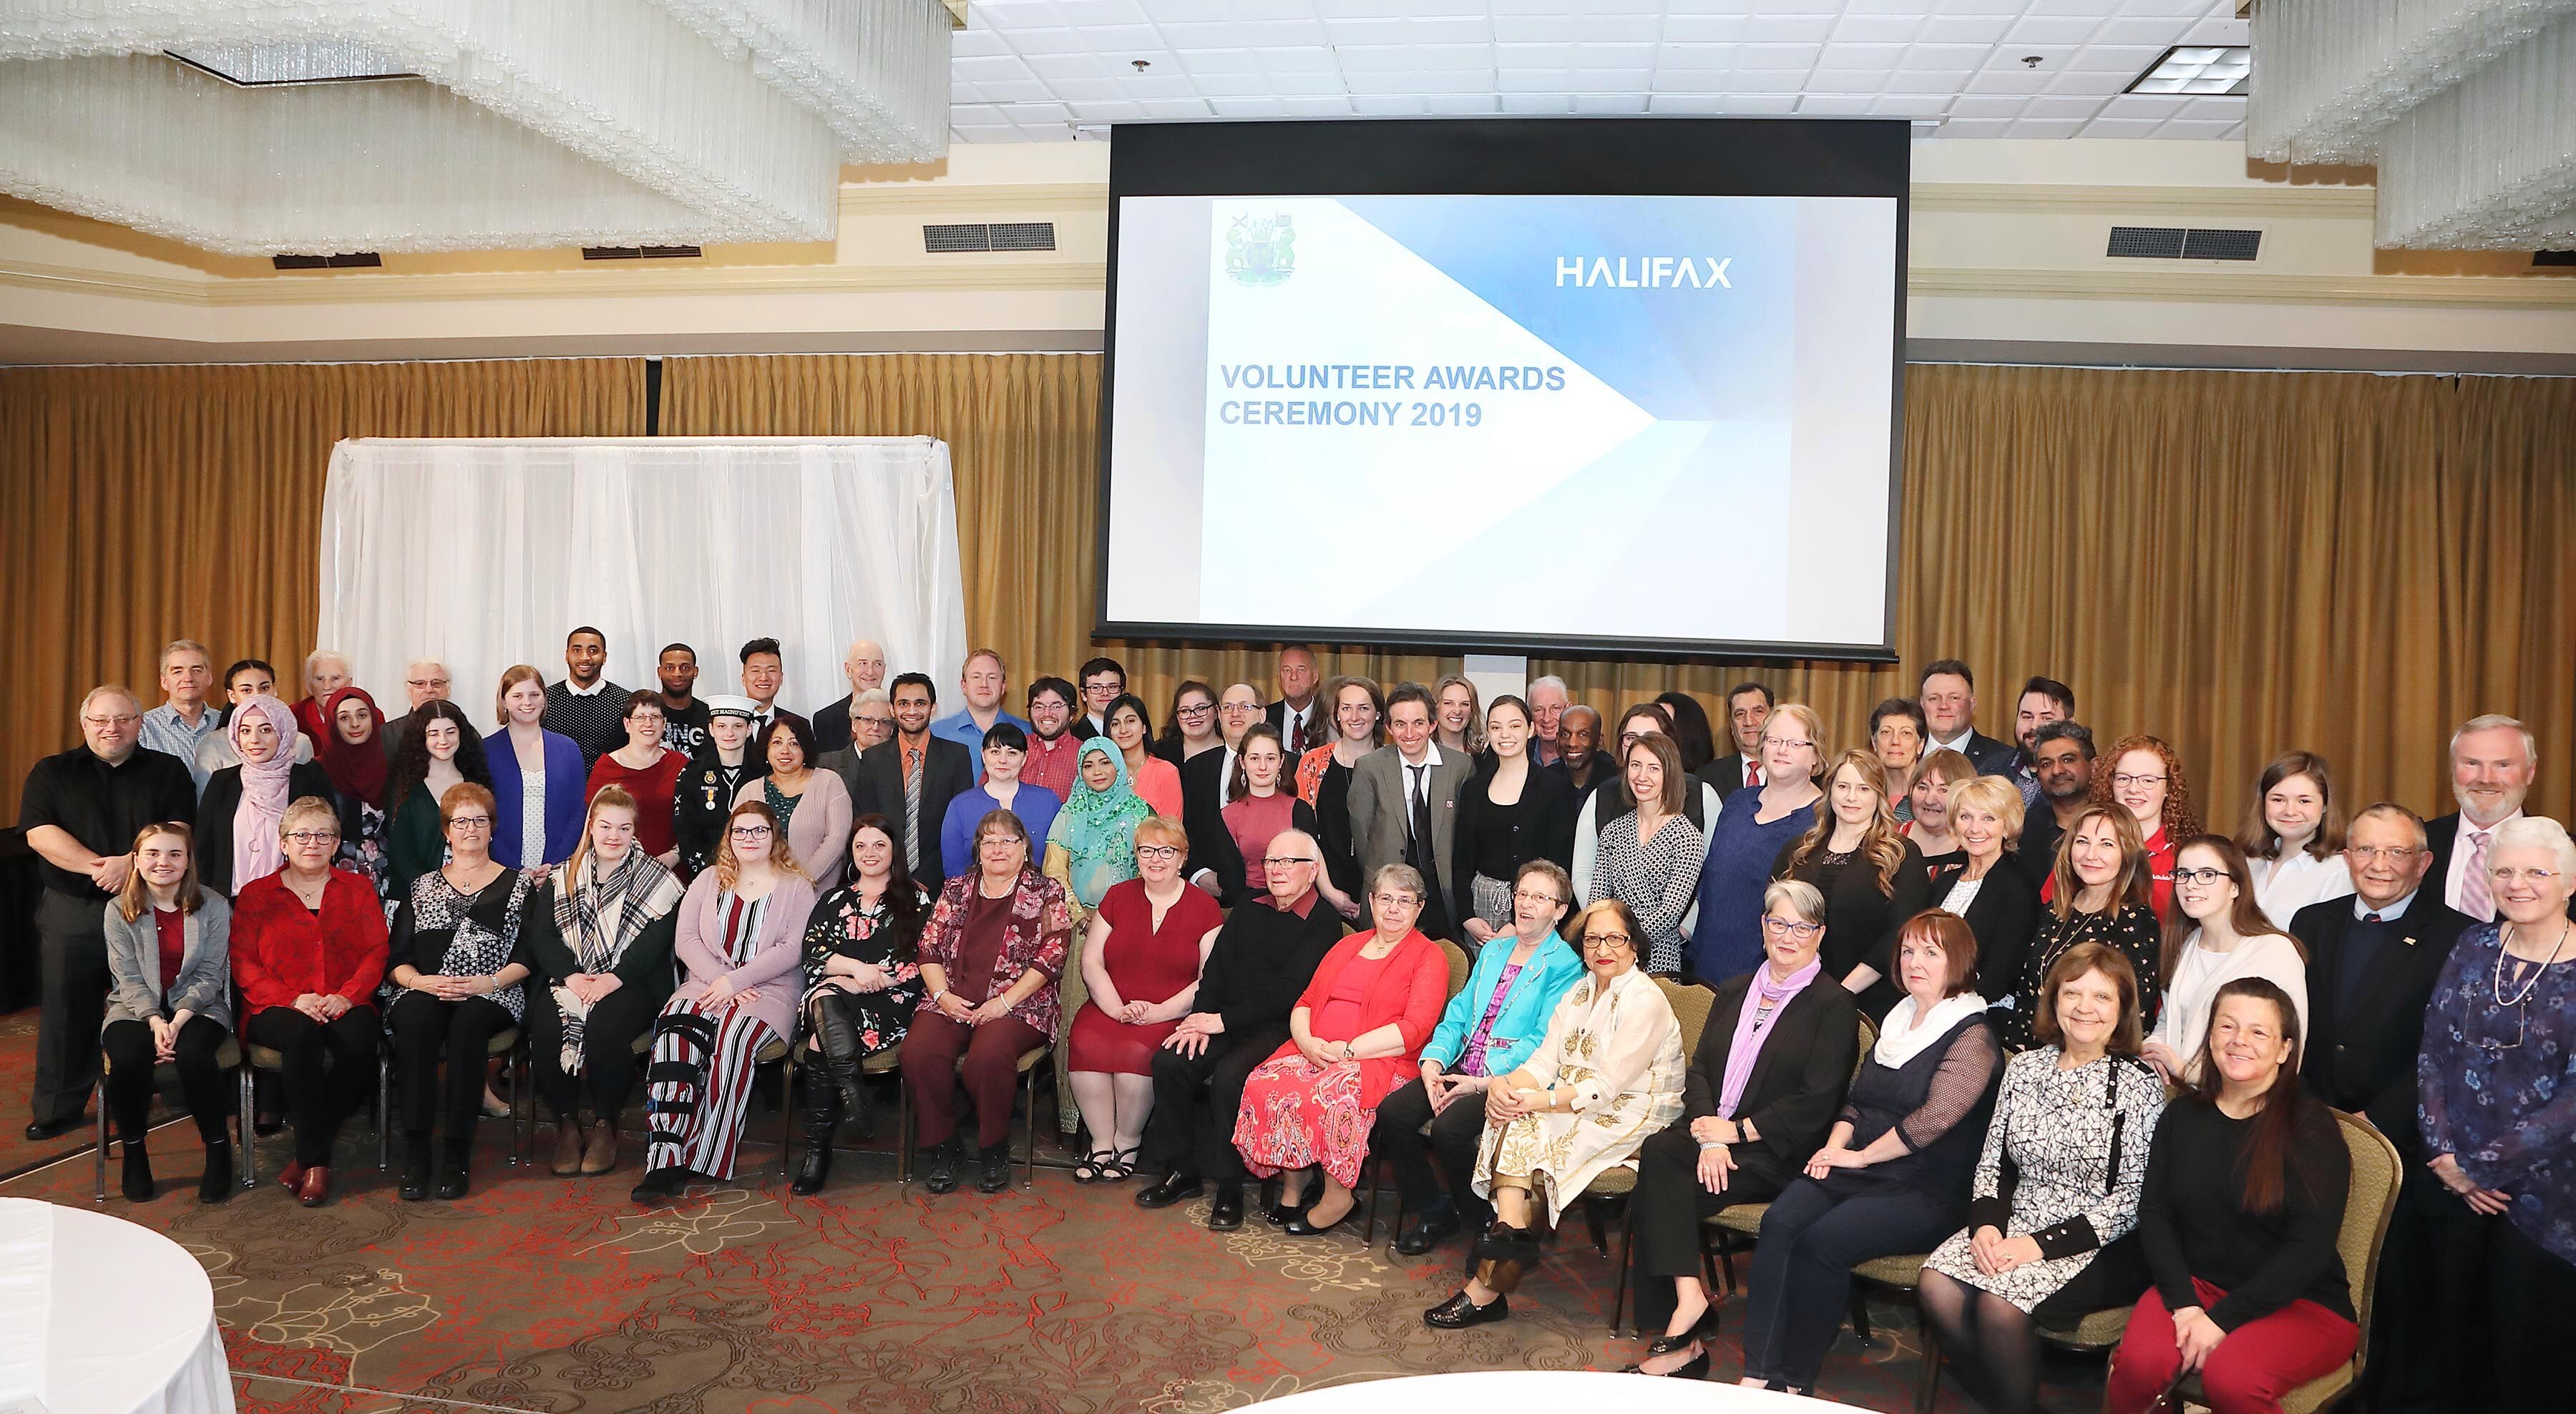 A group photo of the 2019 Volunteer Award winners